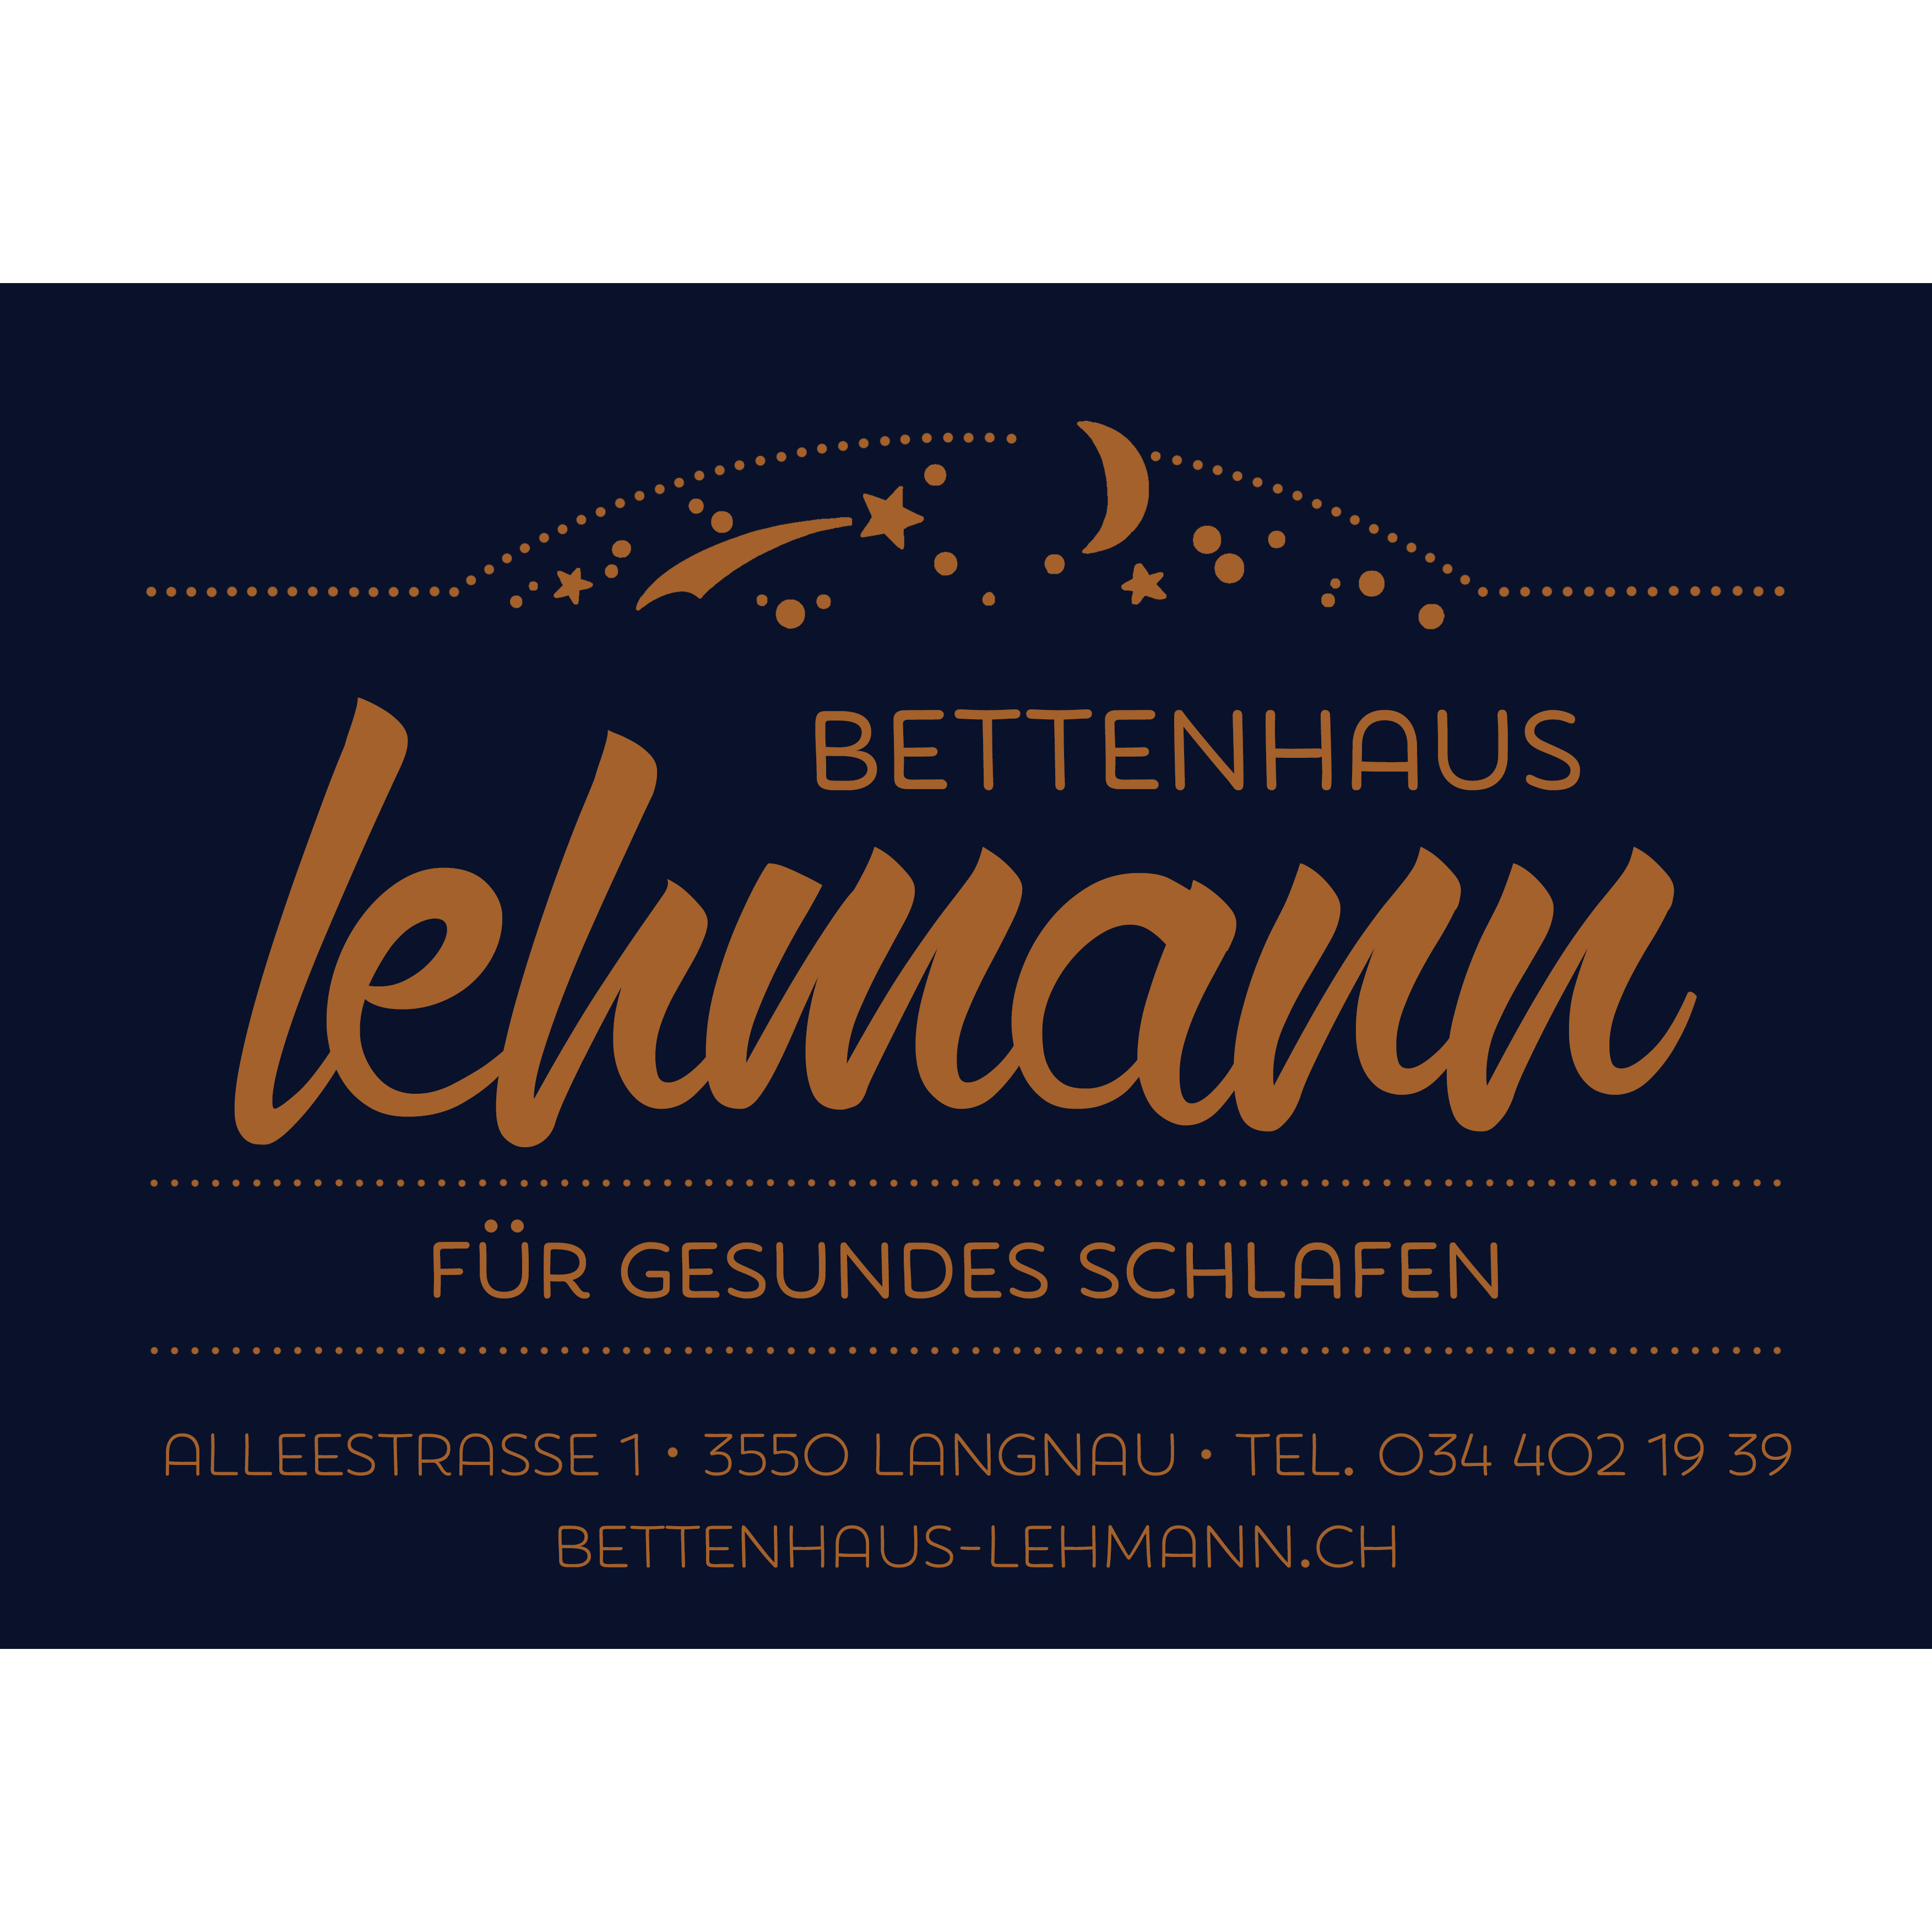 Bettenhaus Lehmann in Langnau